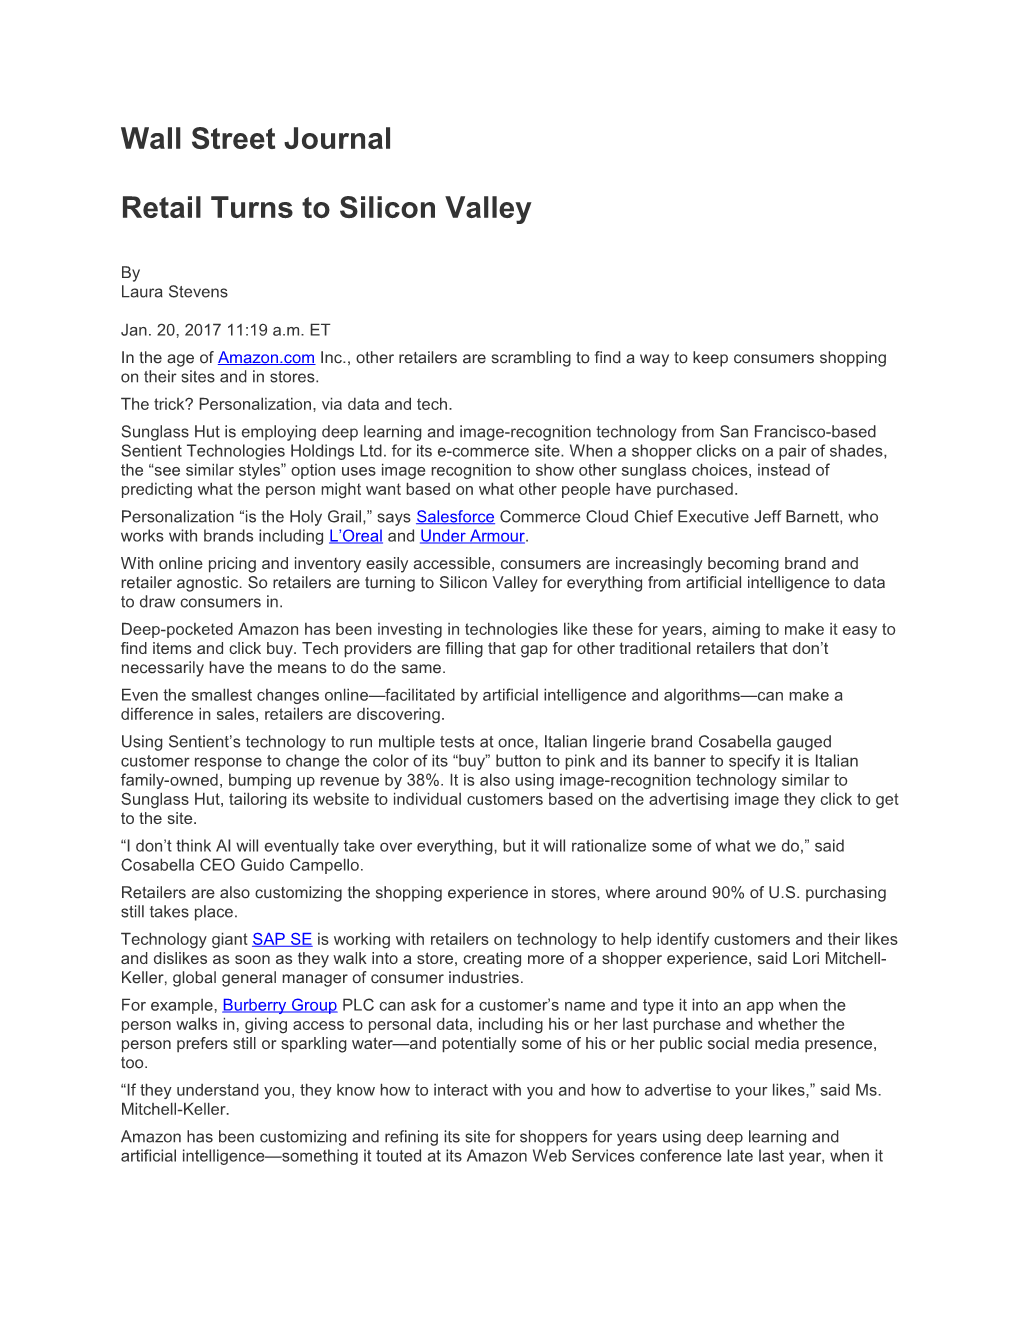 Retail Turns to Silicon Valley